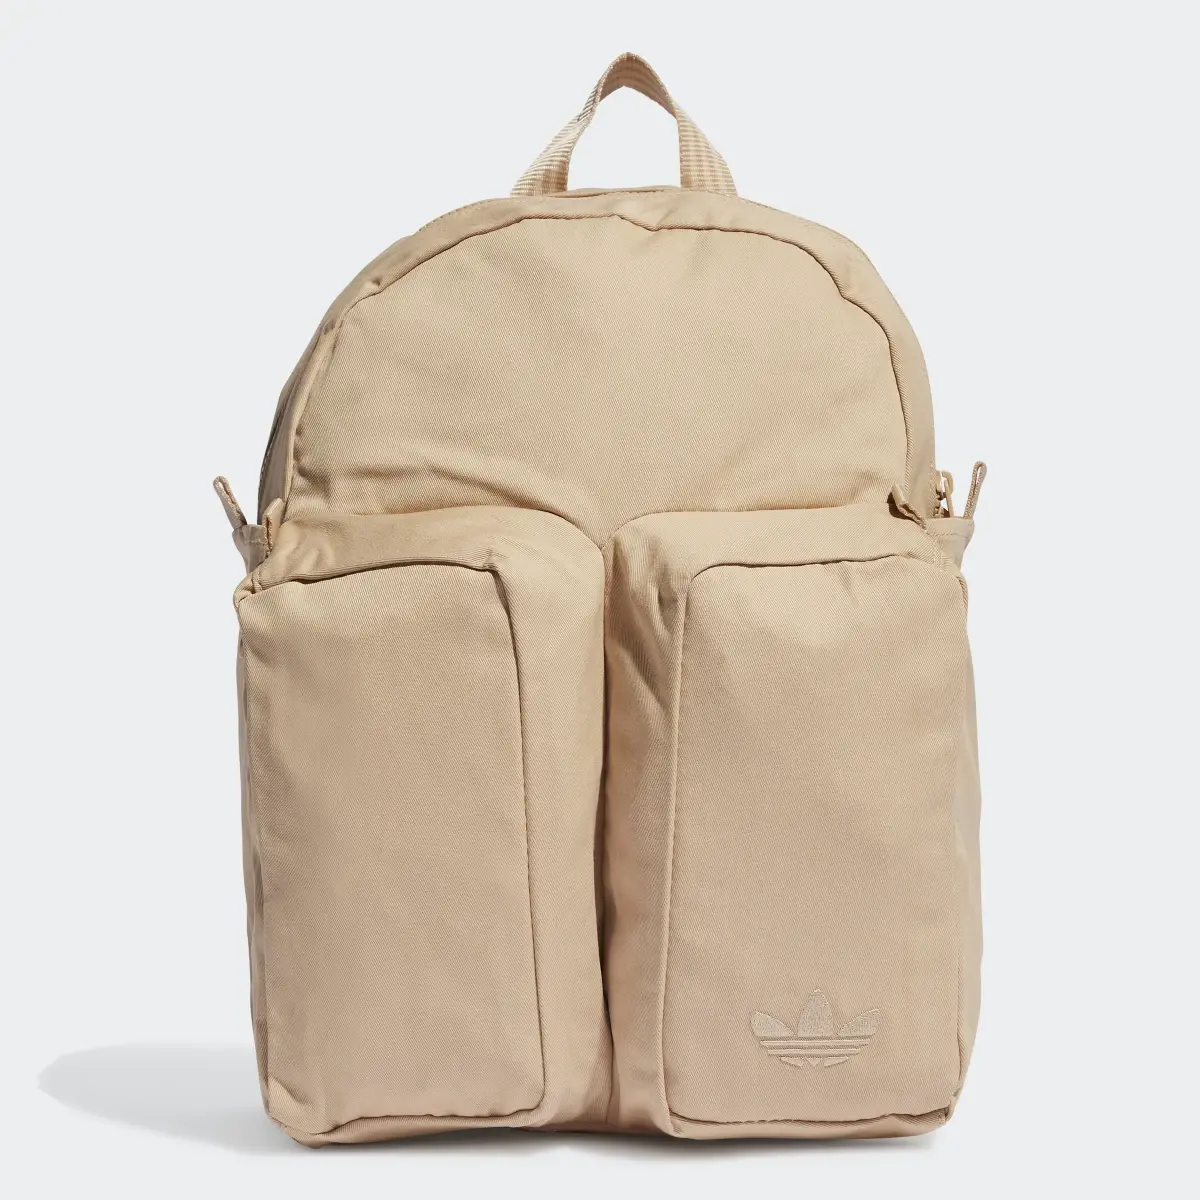 Adidas RIFTA Backpack. 1